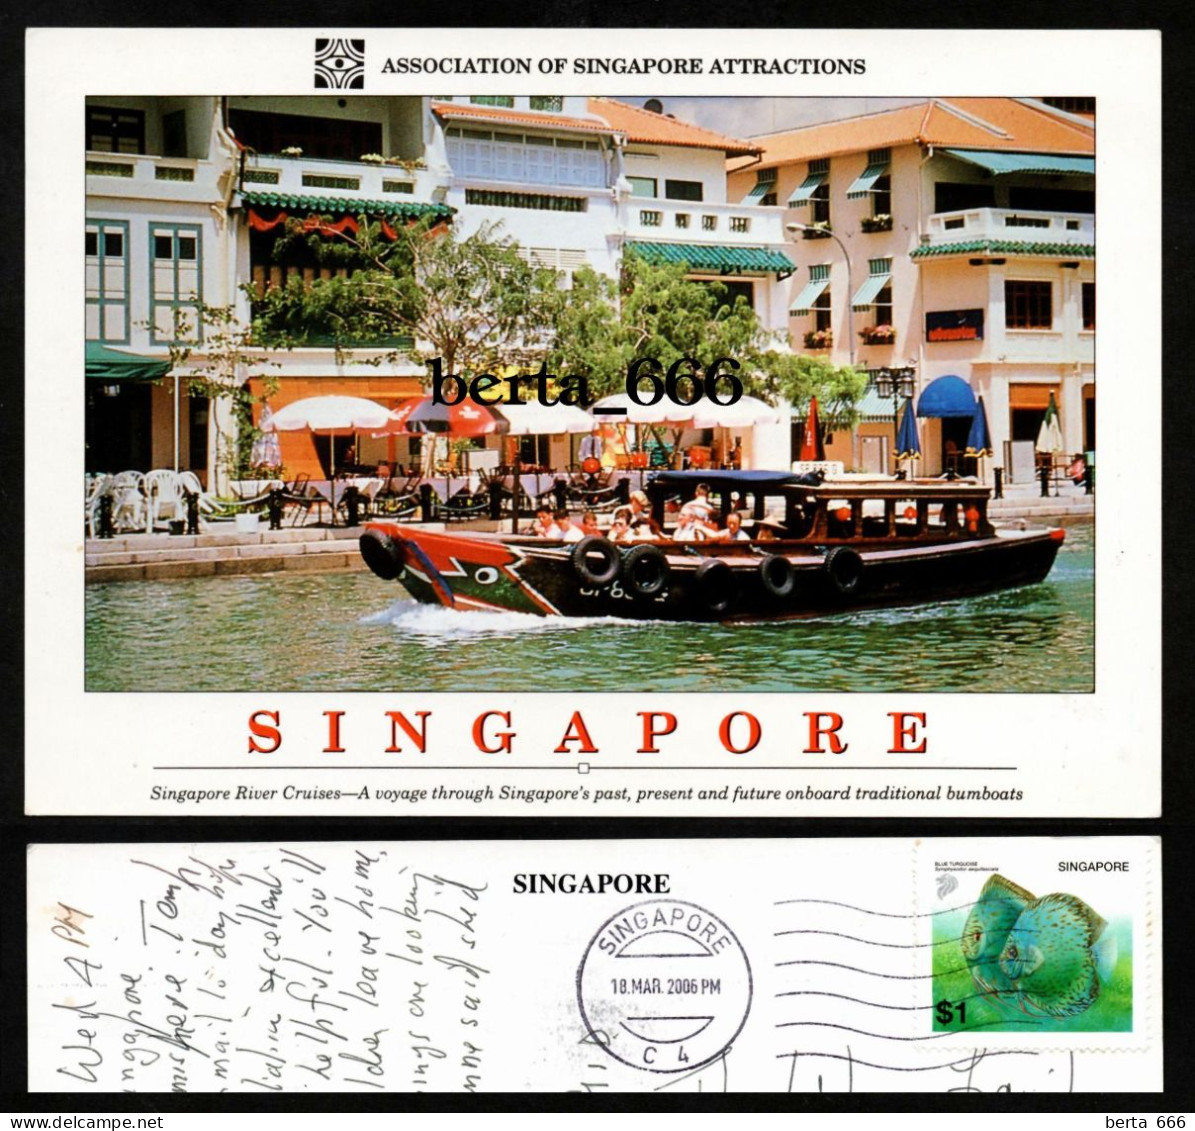 Singapore River Cruises - Singapore